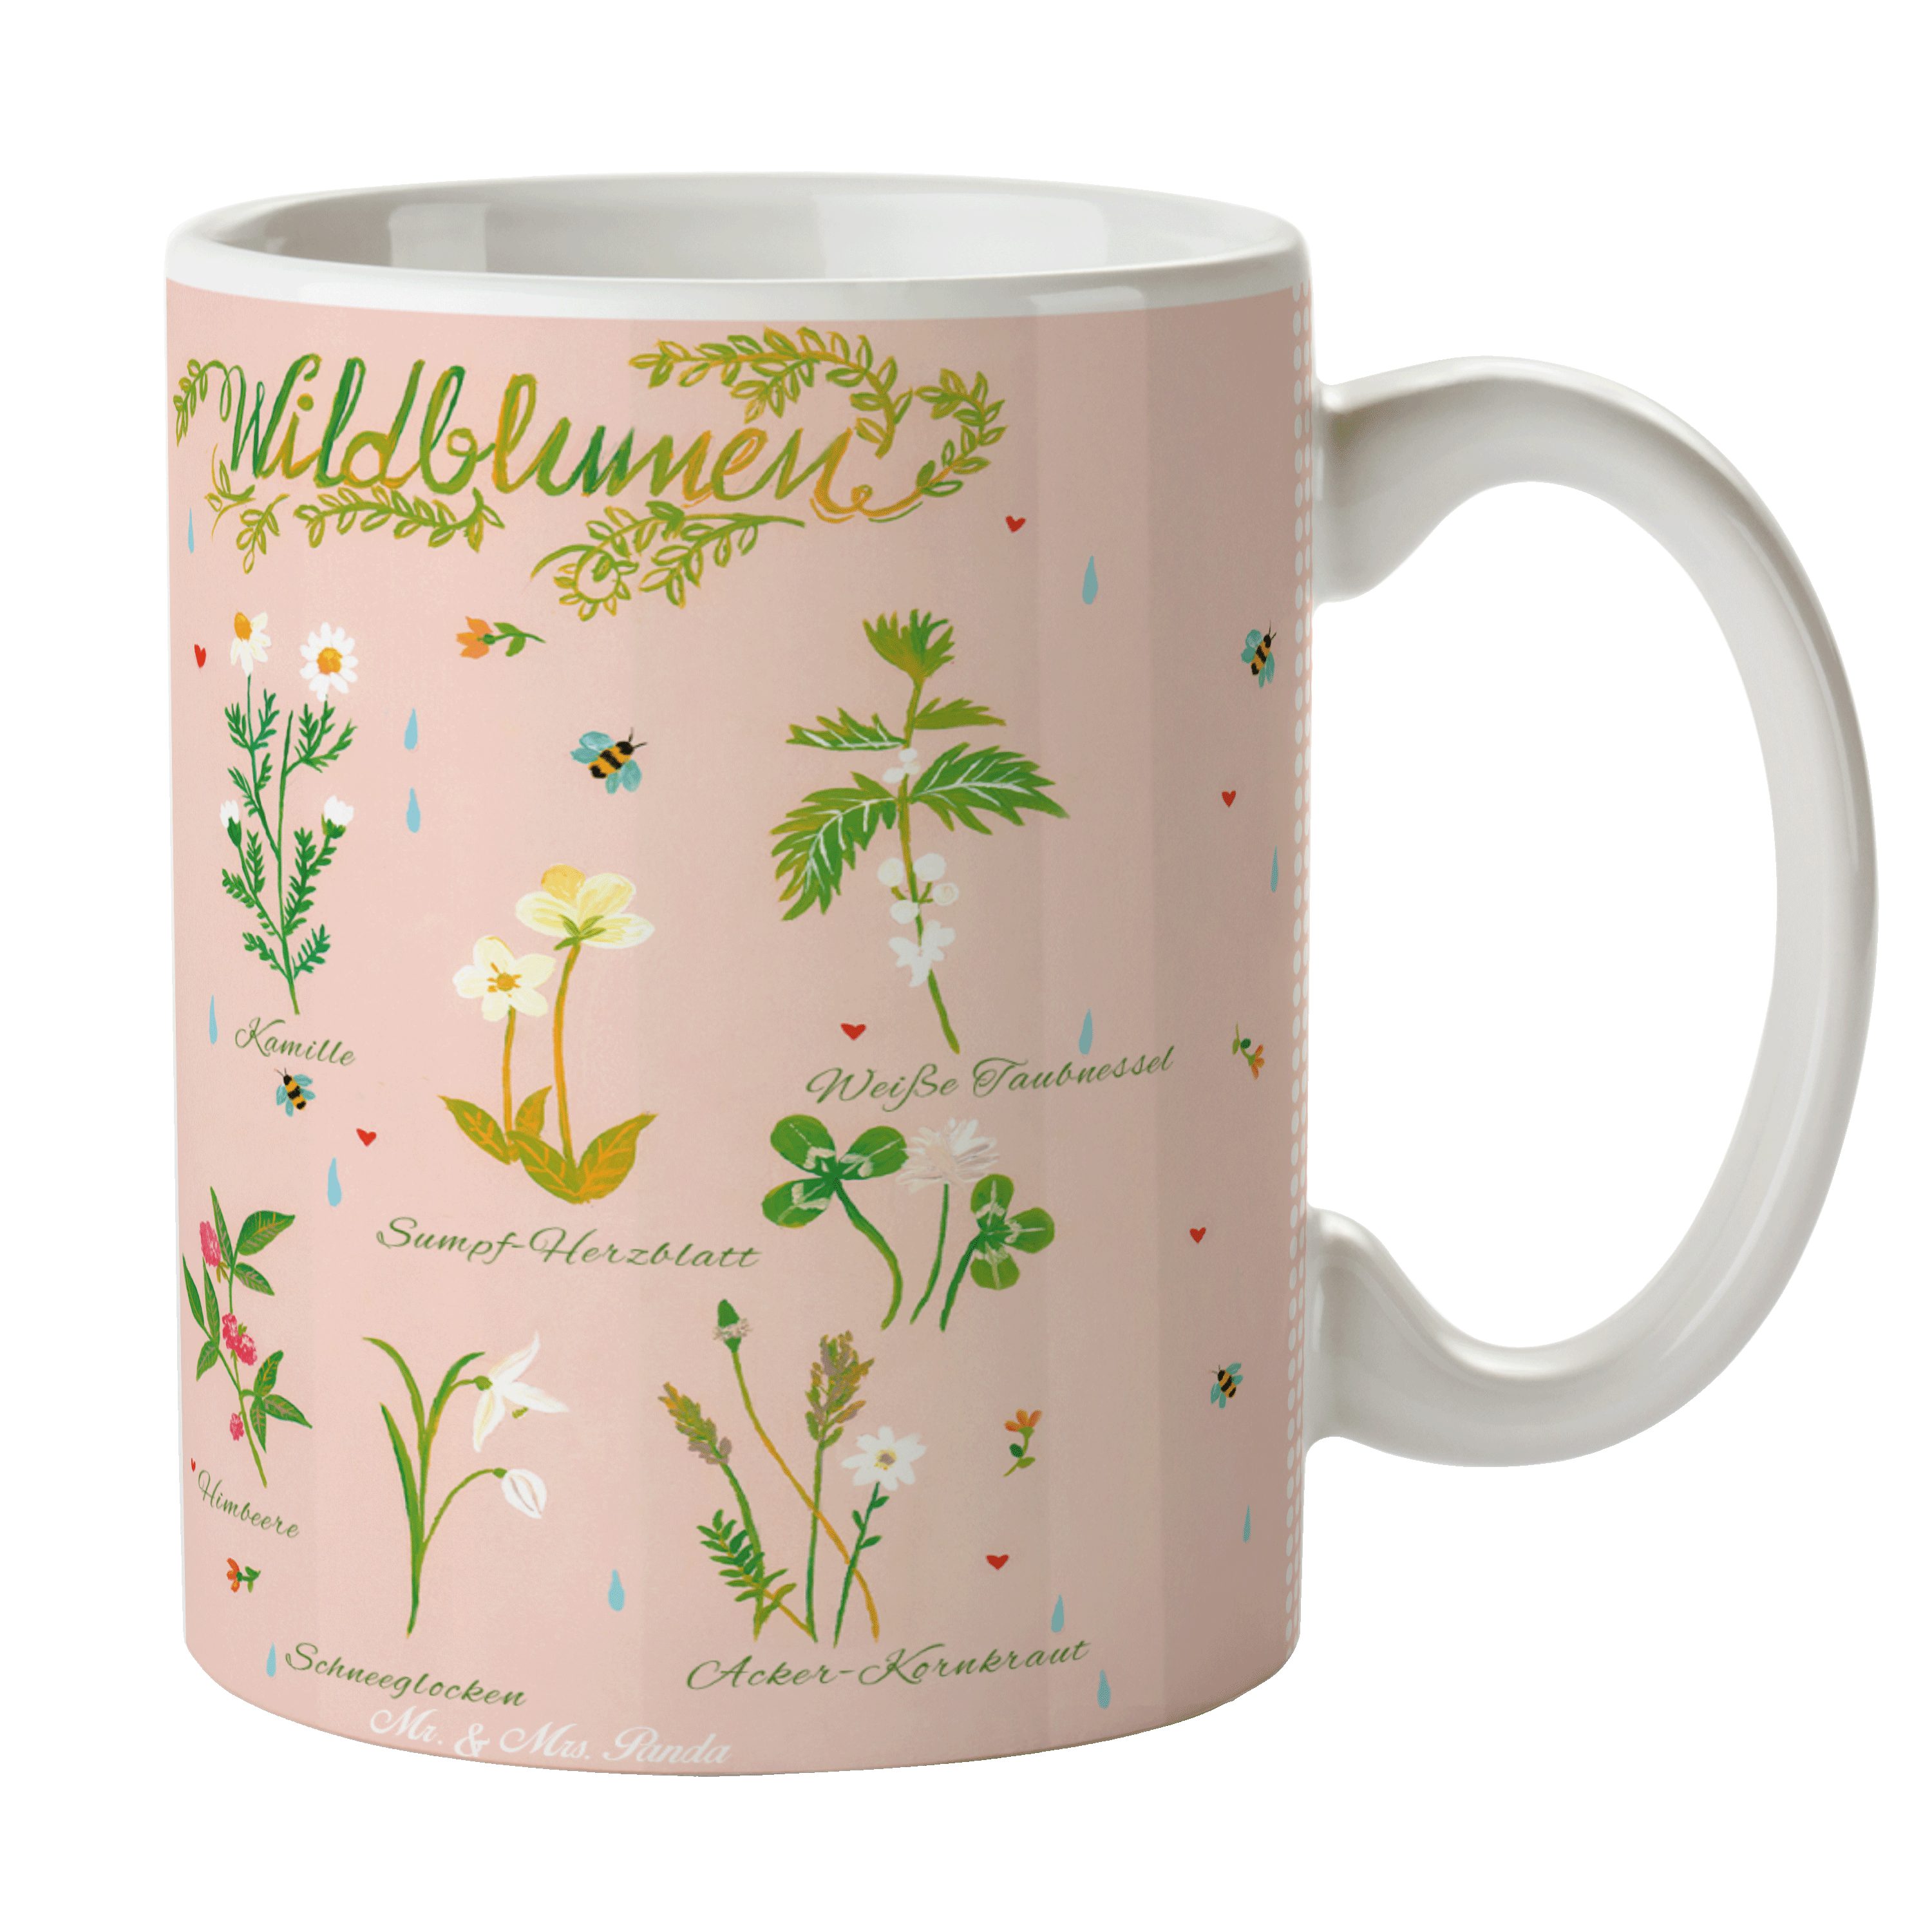 Mr. & Mrs. Panda Tasse Wildblumen - Geschenk, Tasse, Blumen Deko, Keramiktasse, Kaffeetasse, Keramik